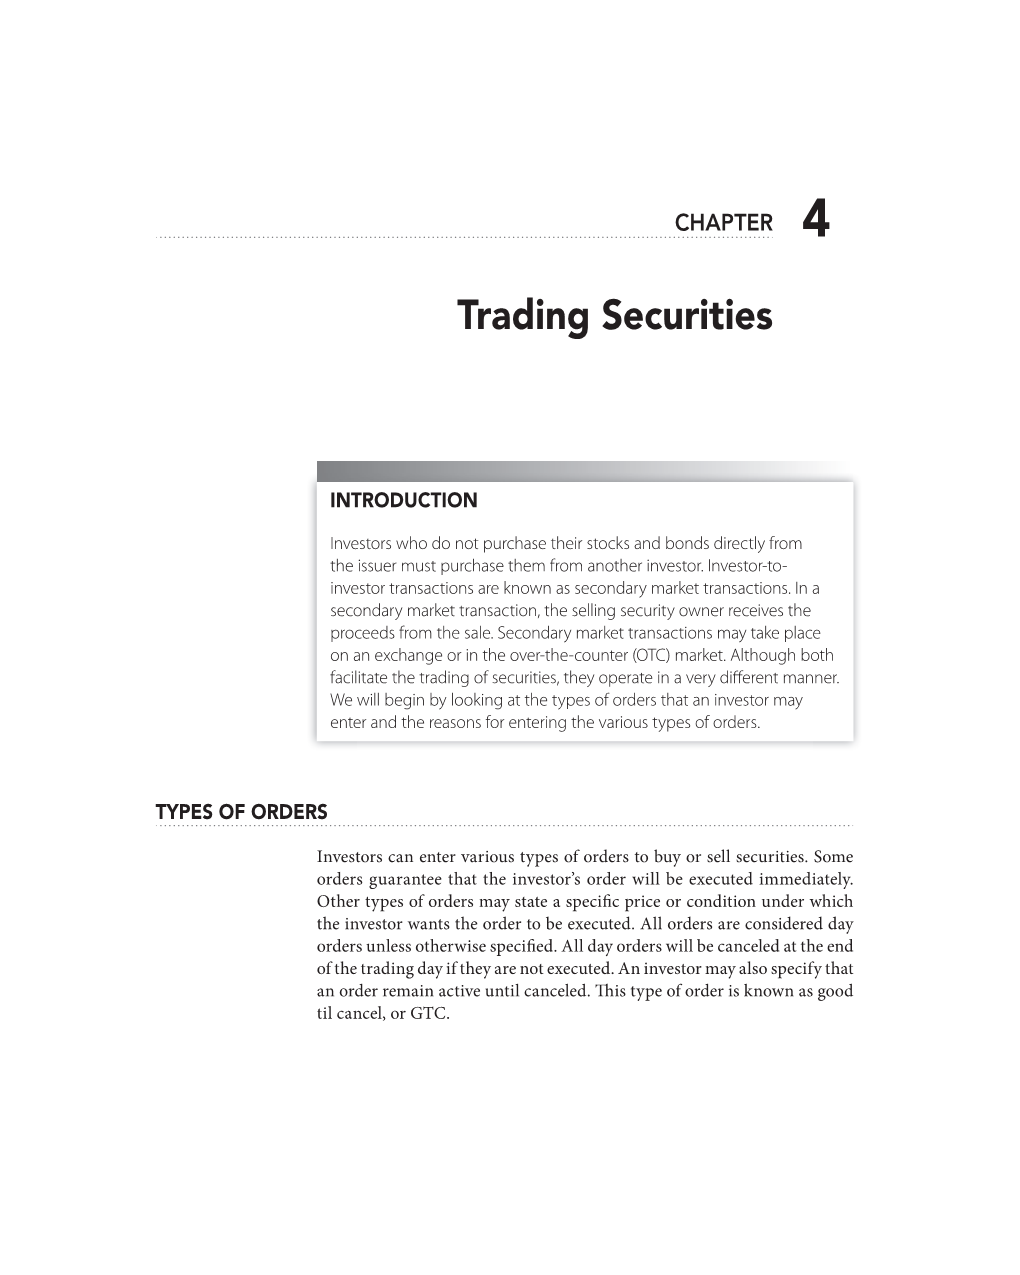 Trading Securities